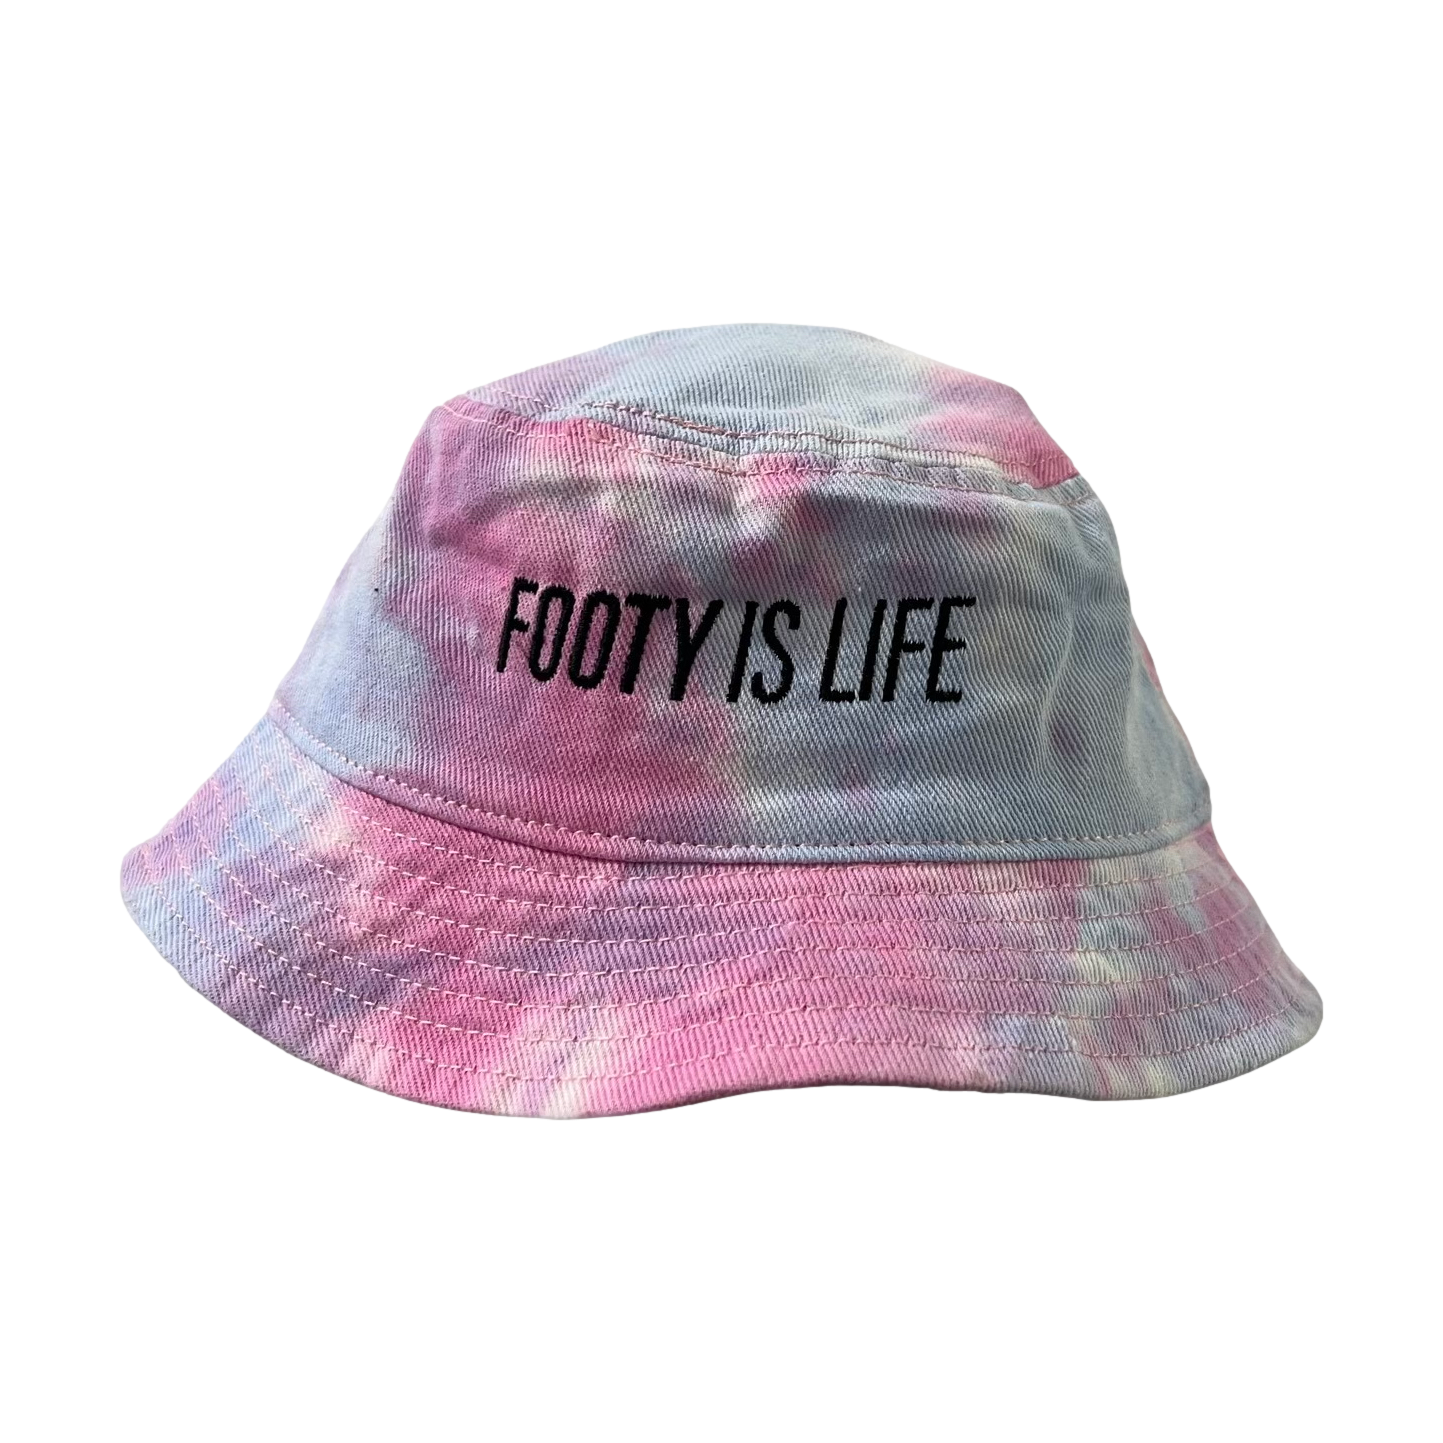 Footy is Life Bucket Hat